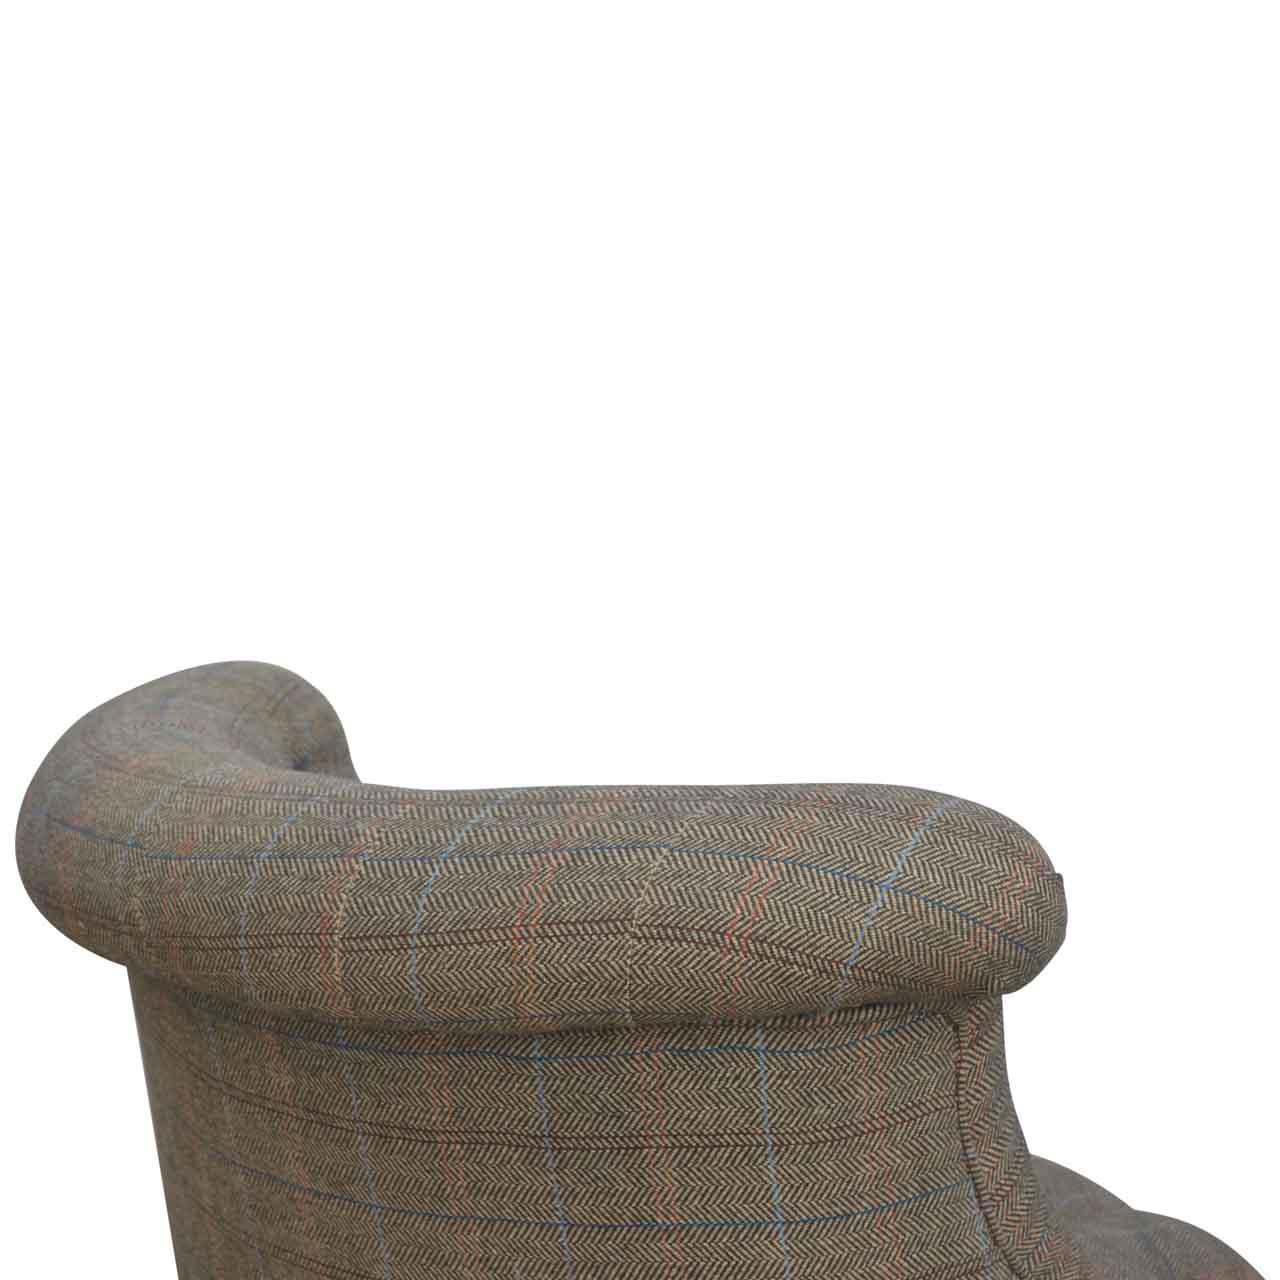 Petite Multi-tweed Accent Chair